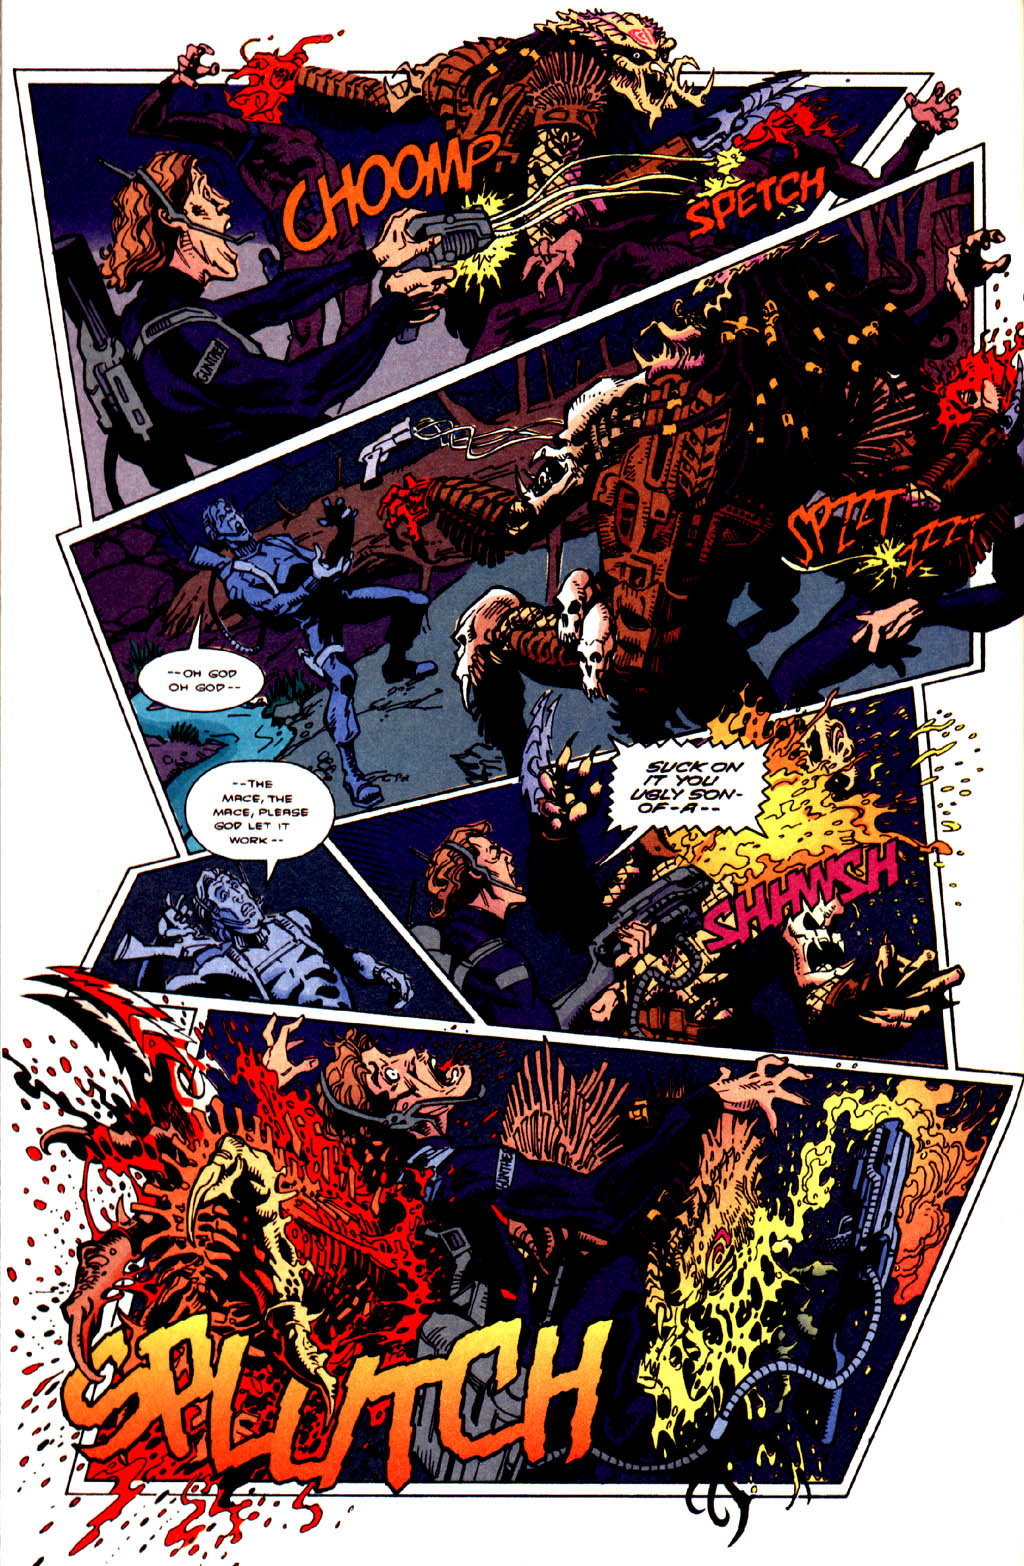 Predator Bad Blood Issue 2 | Viewcomic reading comics ...